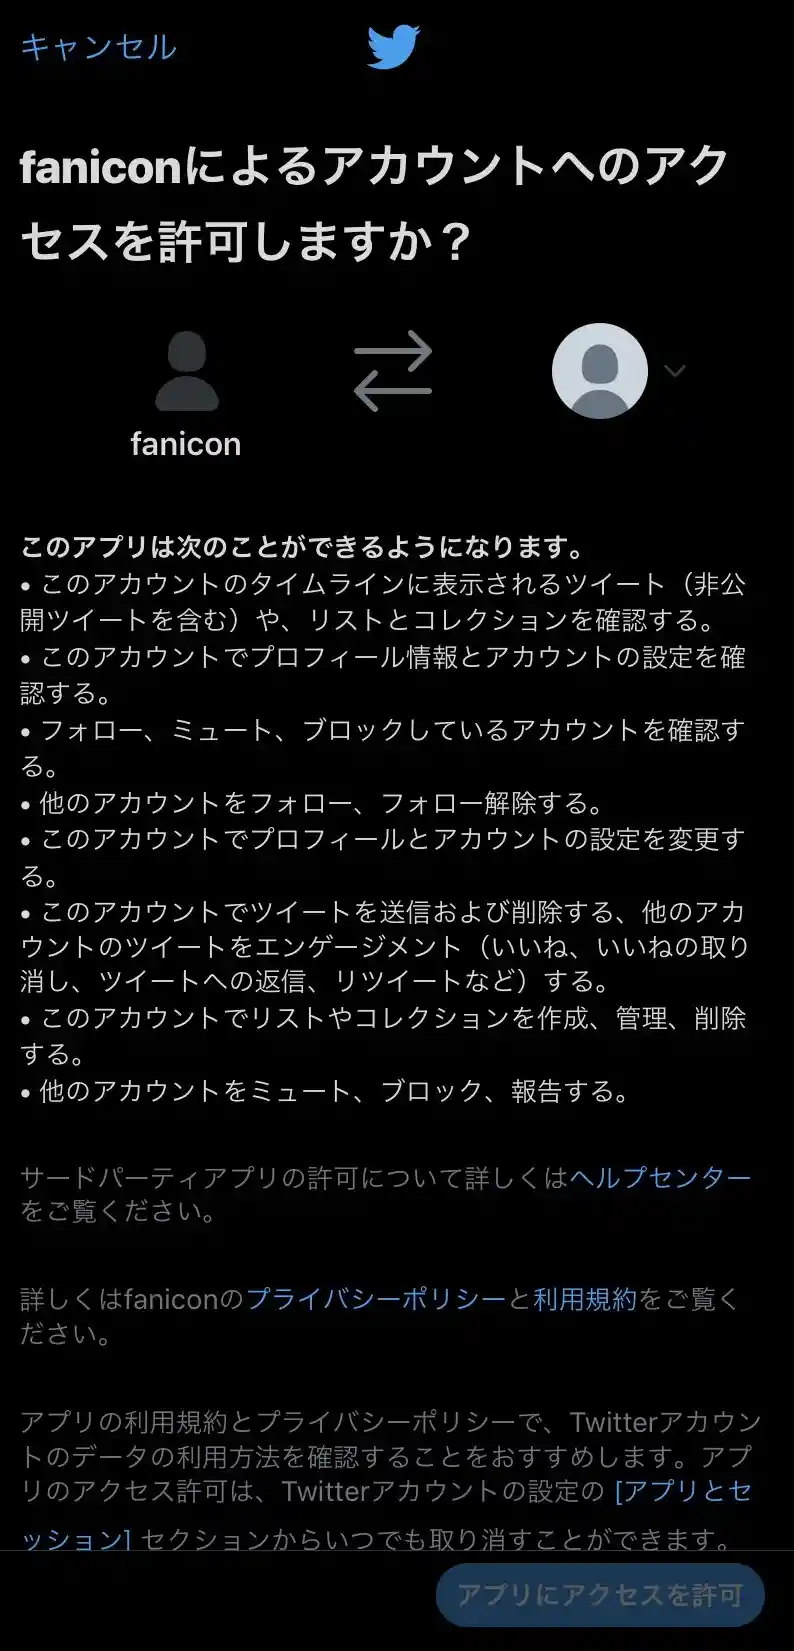 fanicon_ps_06.png